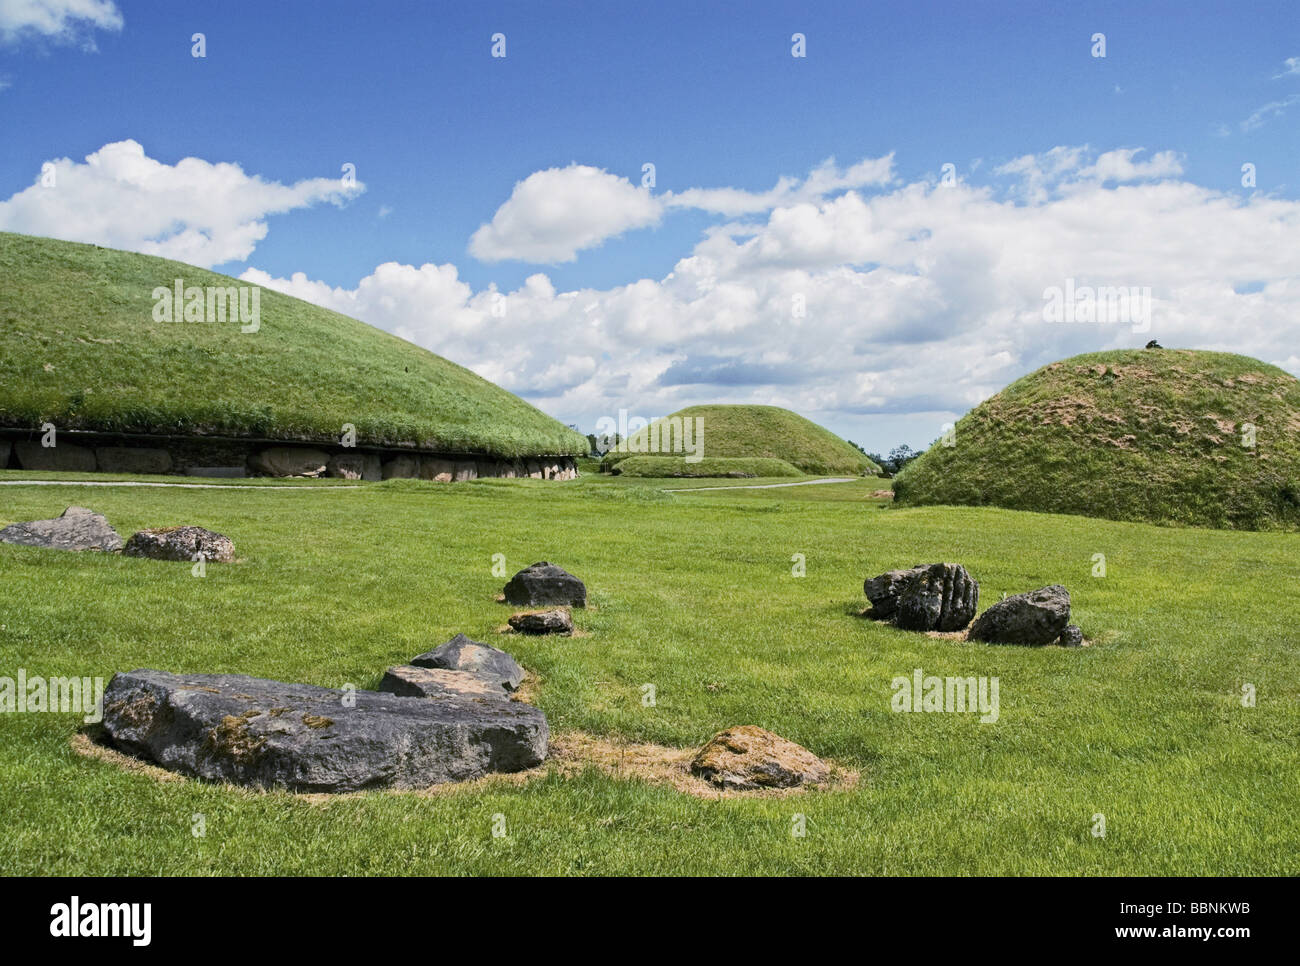 Géographie / voyage, Irlande, Newgrange, mégalithe, complexe de la colline tombe, vers 5000 ans, Additional-Rights Clearance-Info-Not-Available- Banque D'Images